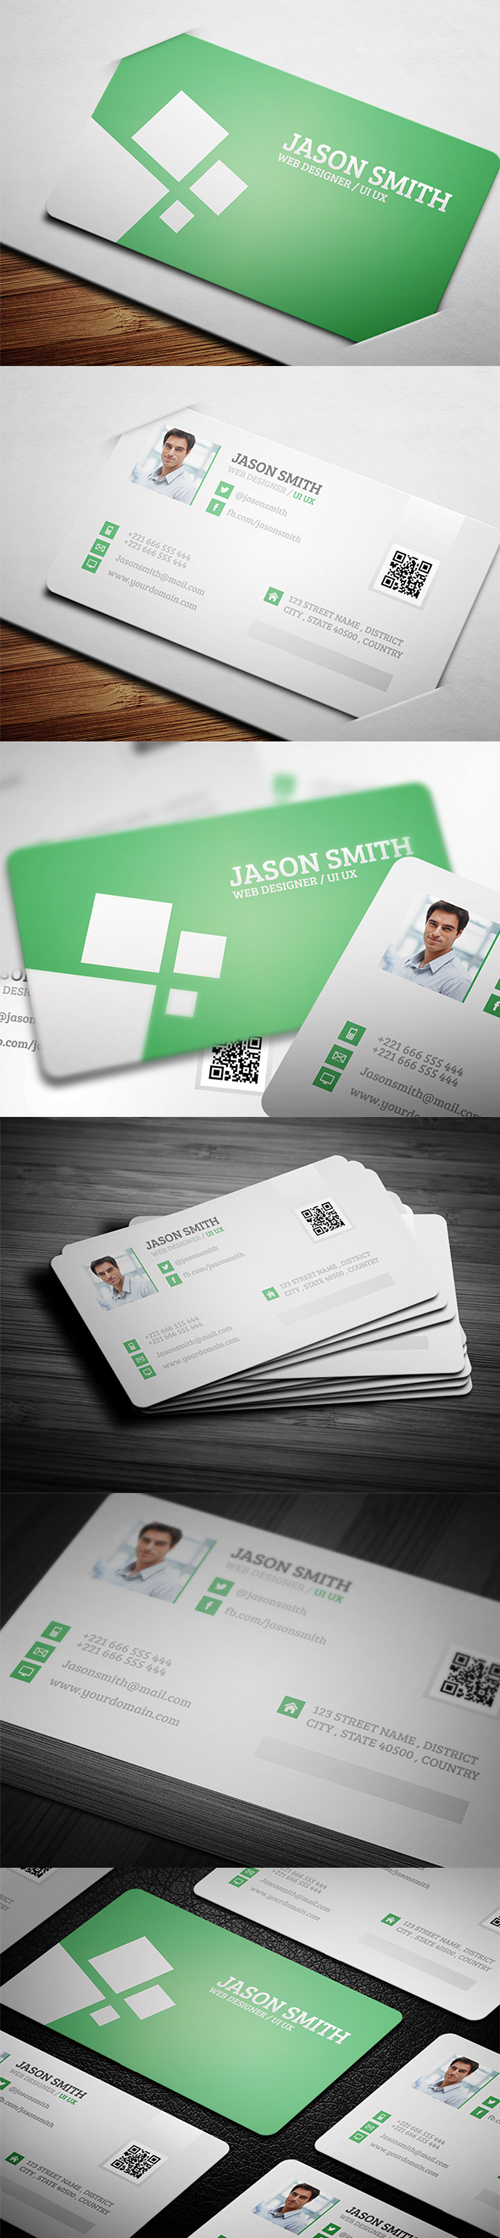 business cards template design - 5